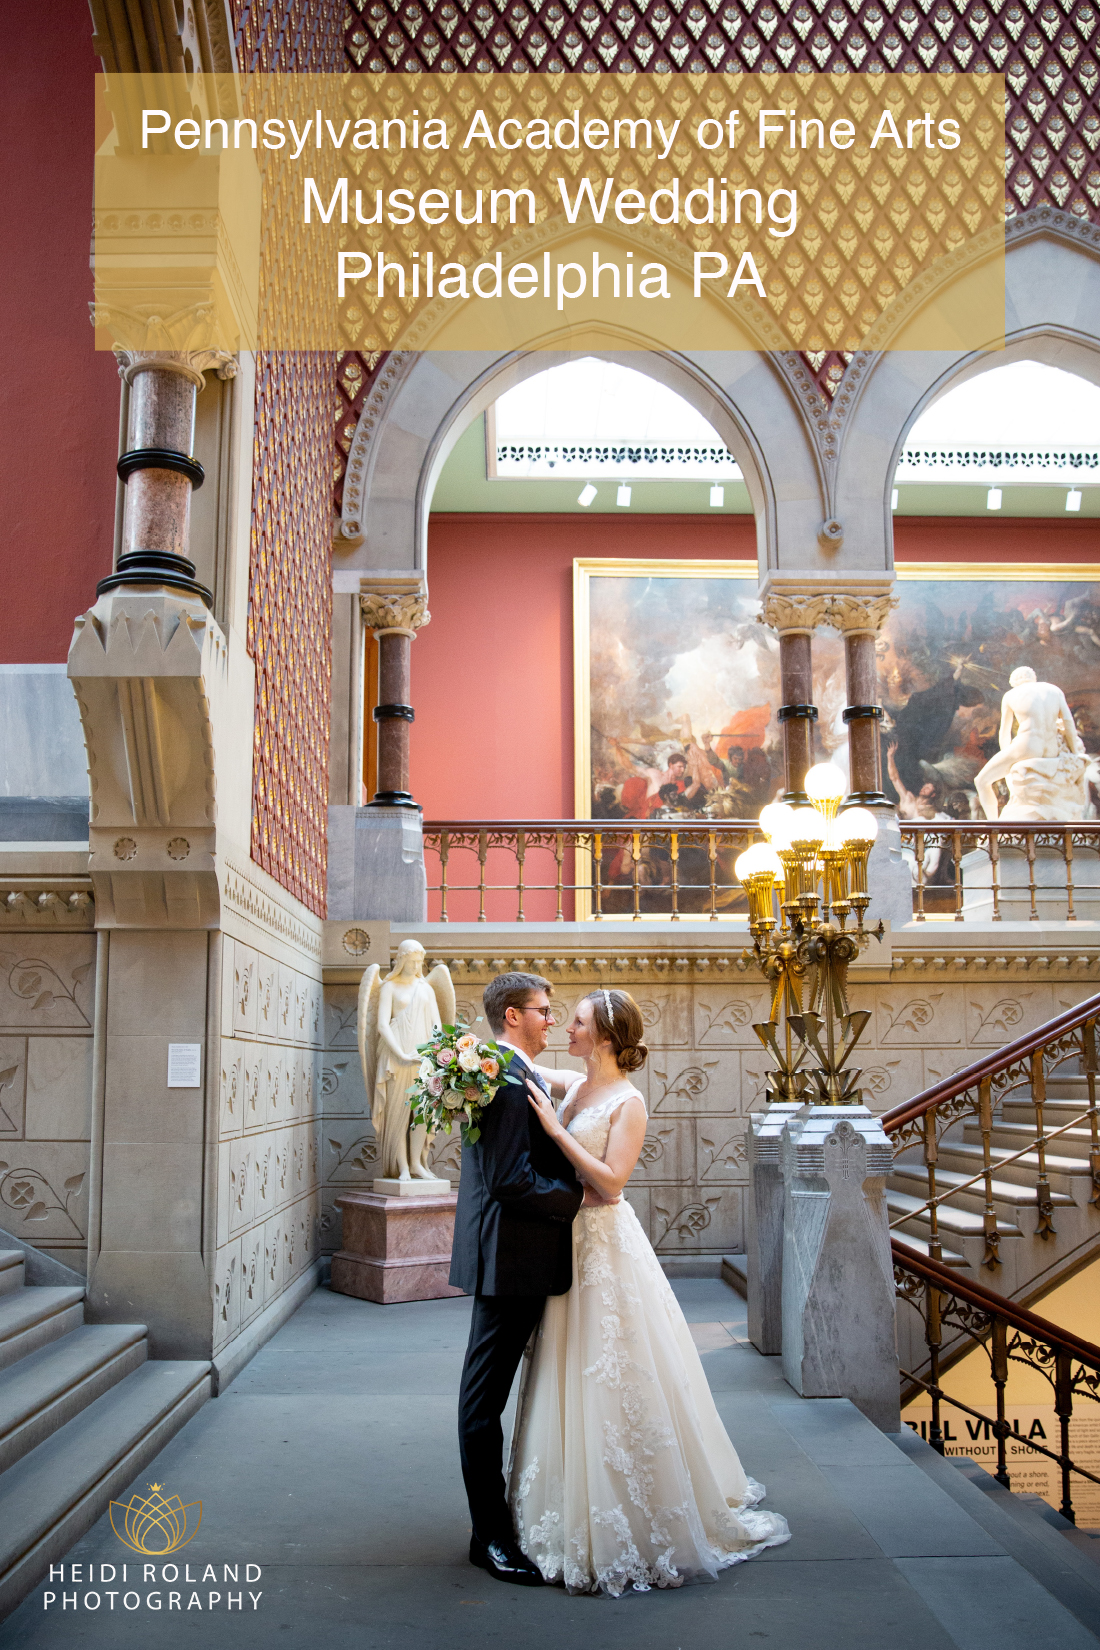 PAFA Museum wedding Philadelphia